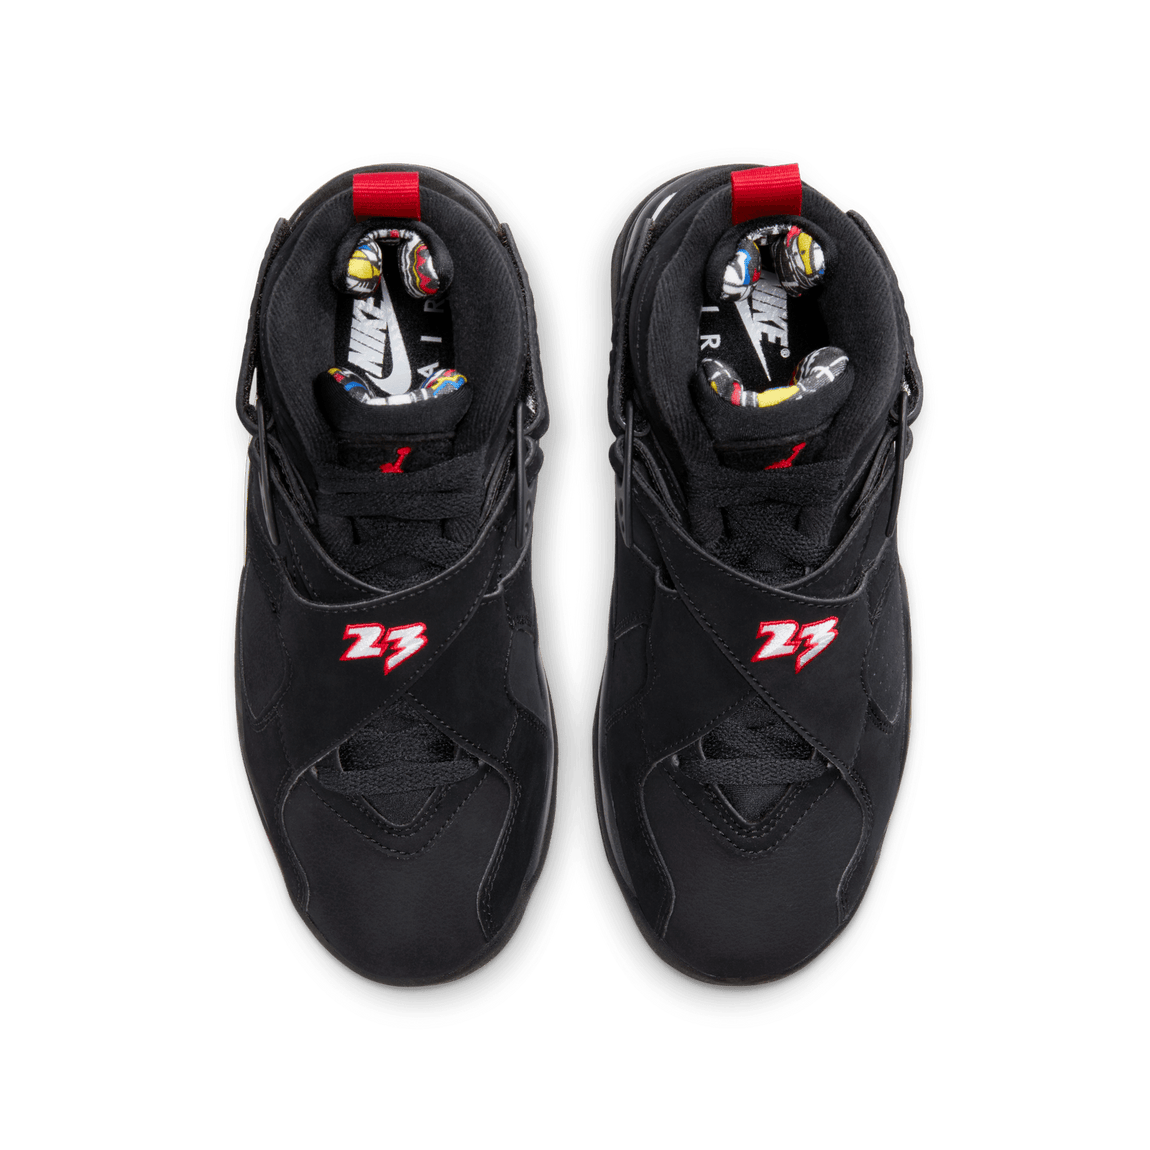 Air Jordan 8 Retro “Playoffs” GS (Black/True Red-White) 9/30 - Air Jordan 8 Retro “Playoffs” GS (Black/True Red-White) 9/30 - 